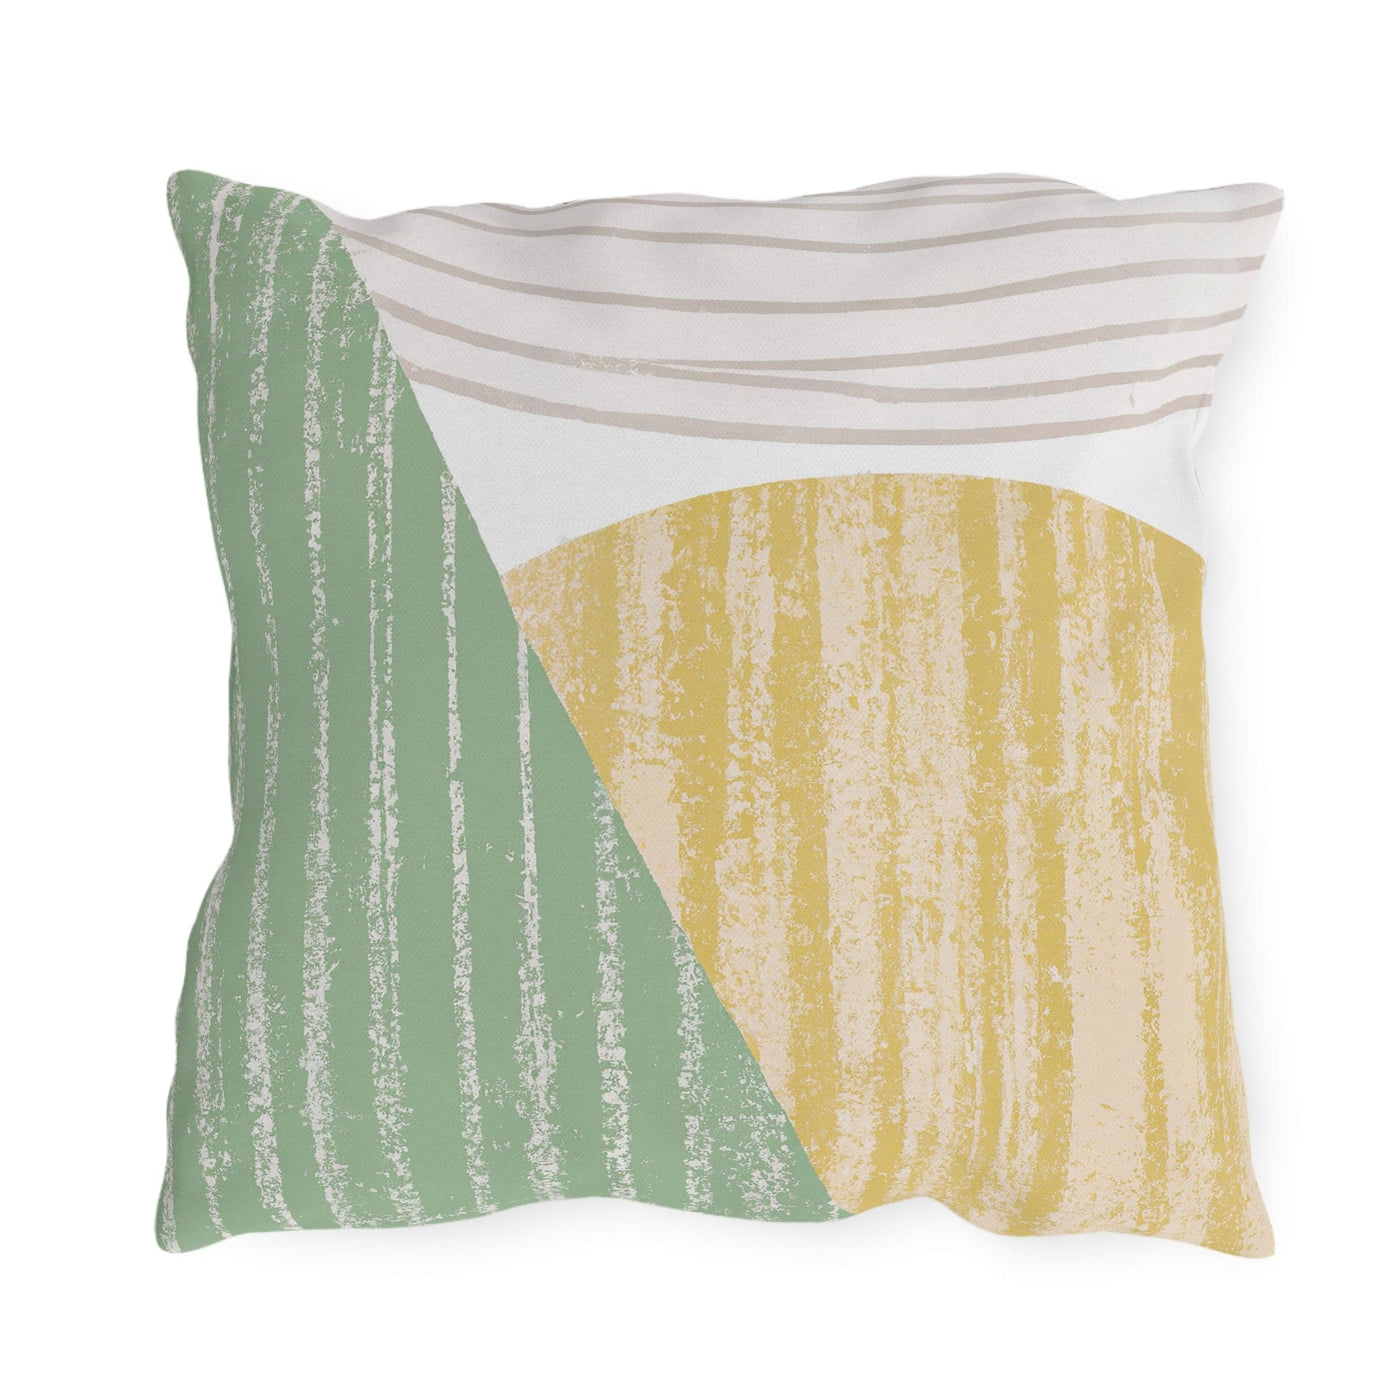 Decorative Outdoor Pillows With Zipper - Set Of 2 Mint Green Textured Look Boho